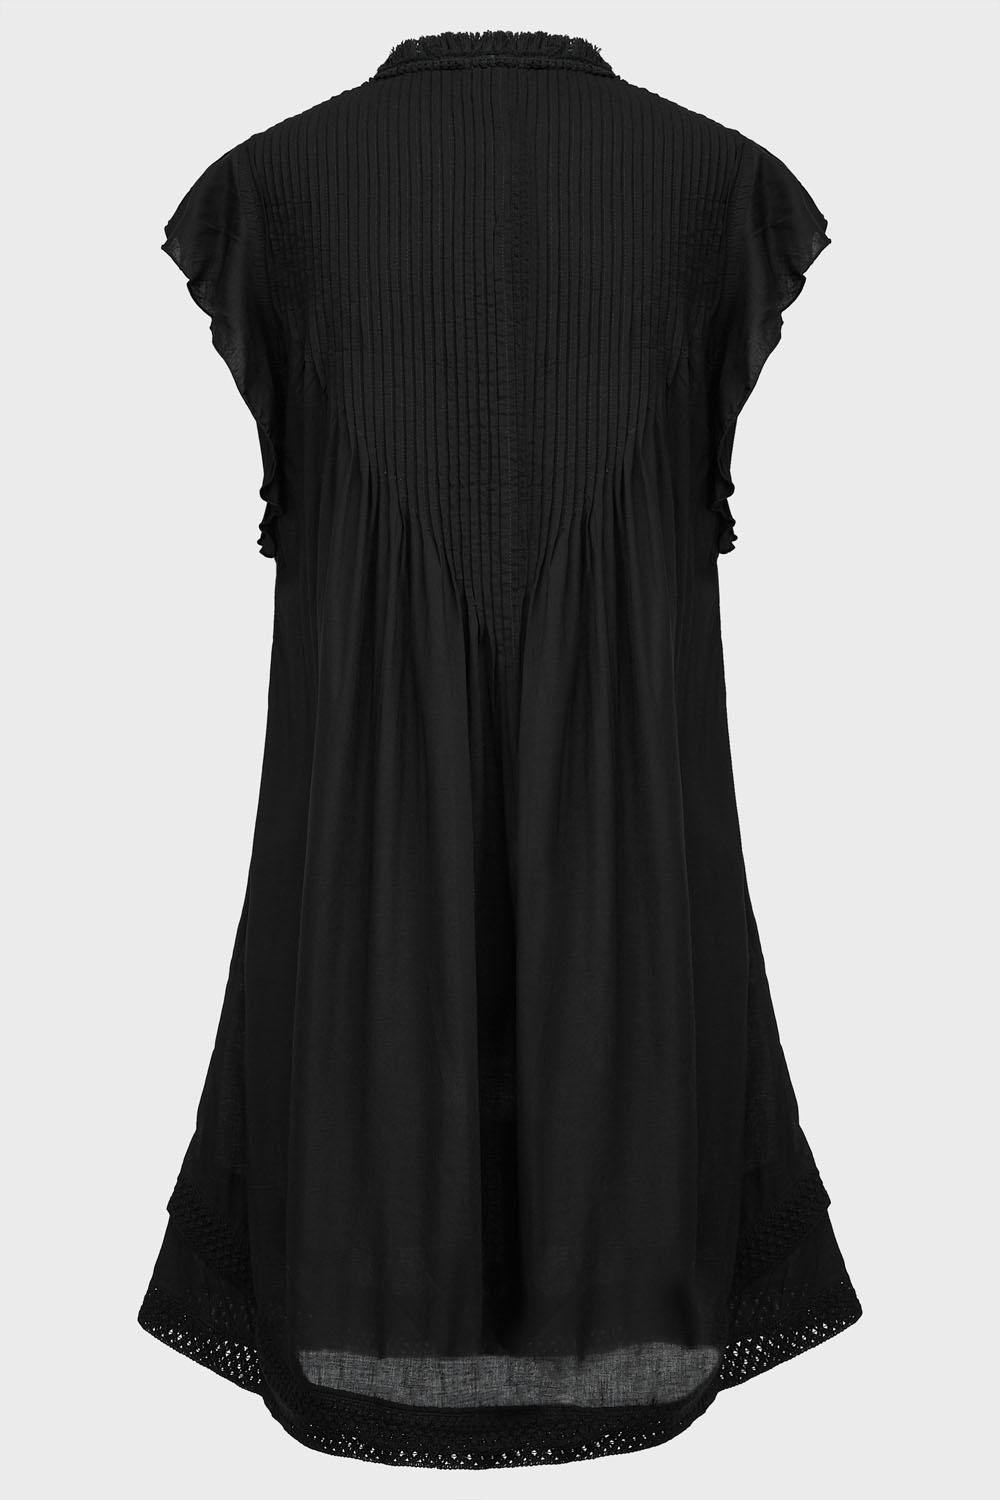 Poupette Sasha Lace-trim Fringed Mini Dress in Black - Lyst